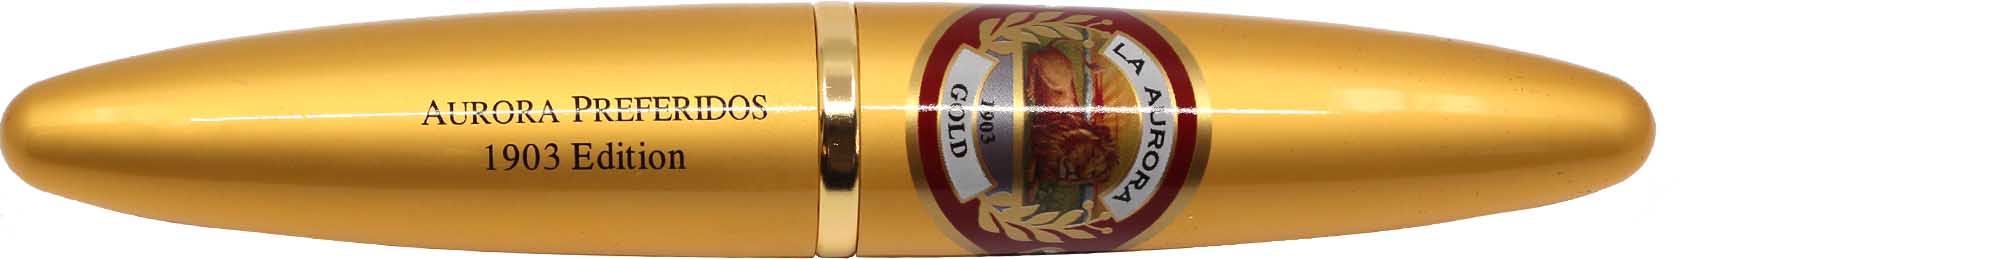 La Aurora Zigarren 1903 Preferidos Corojo Gold